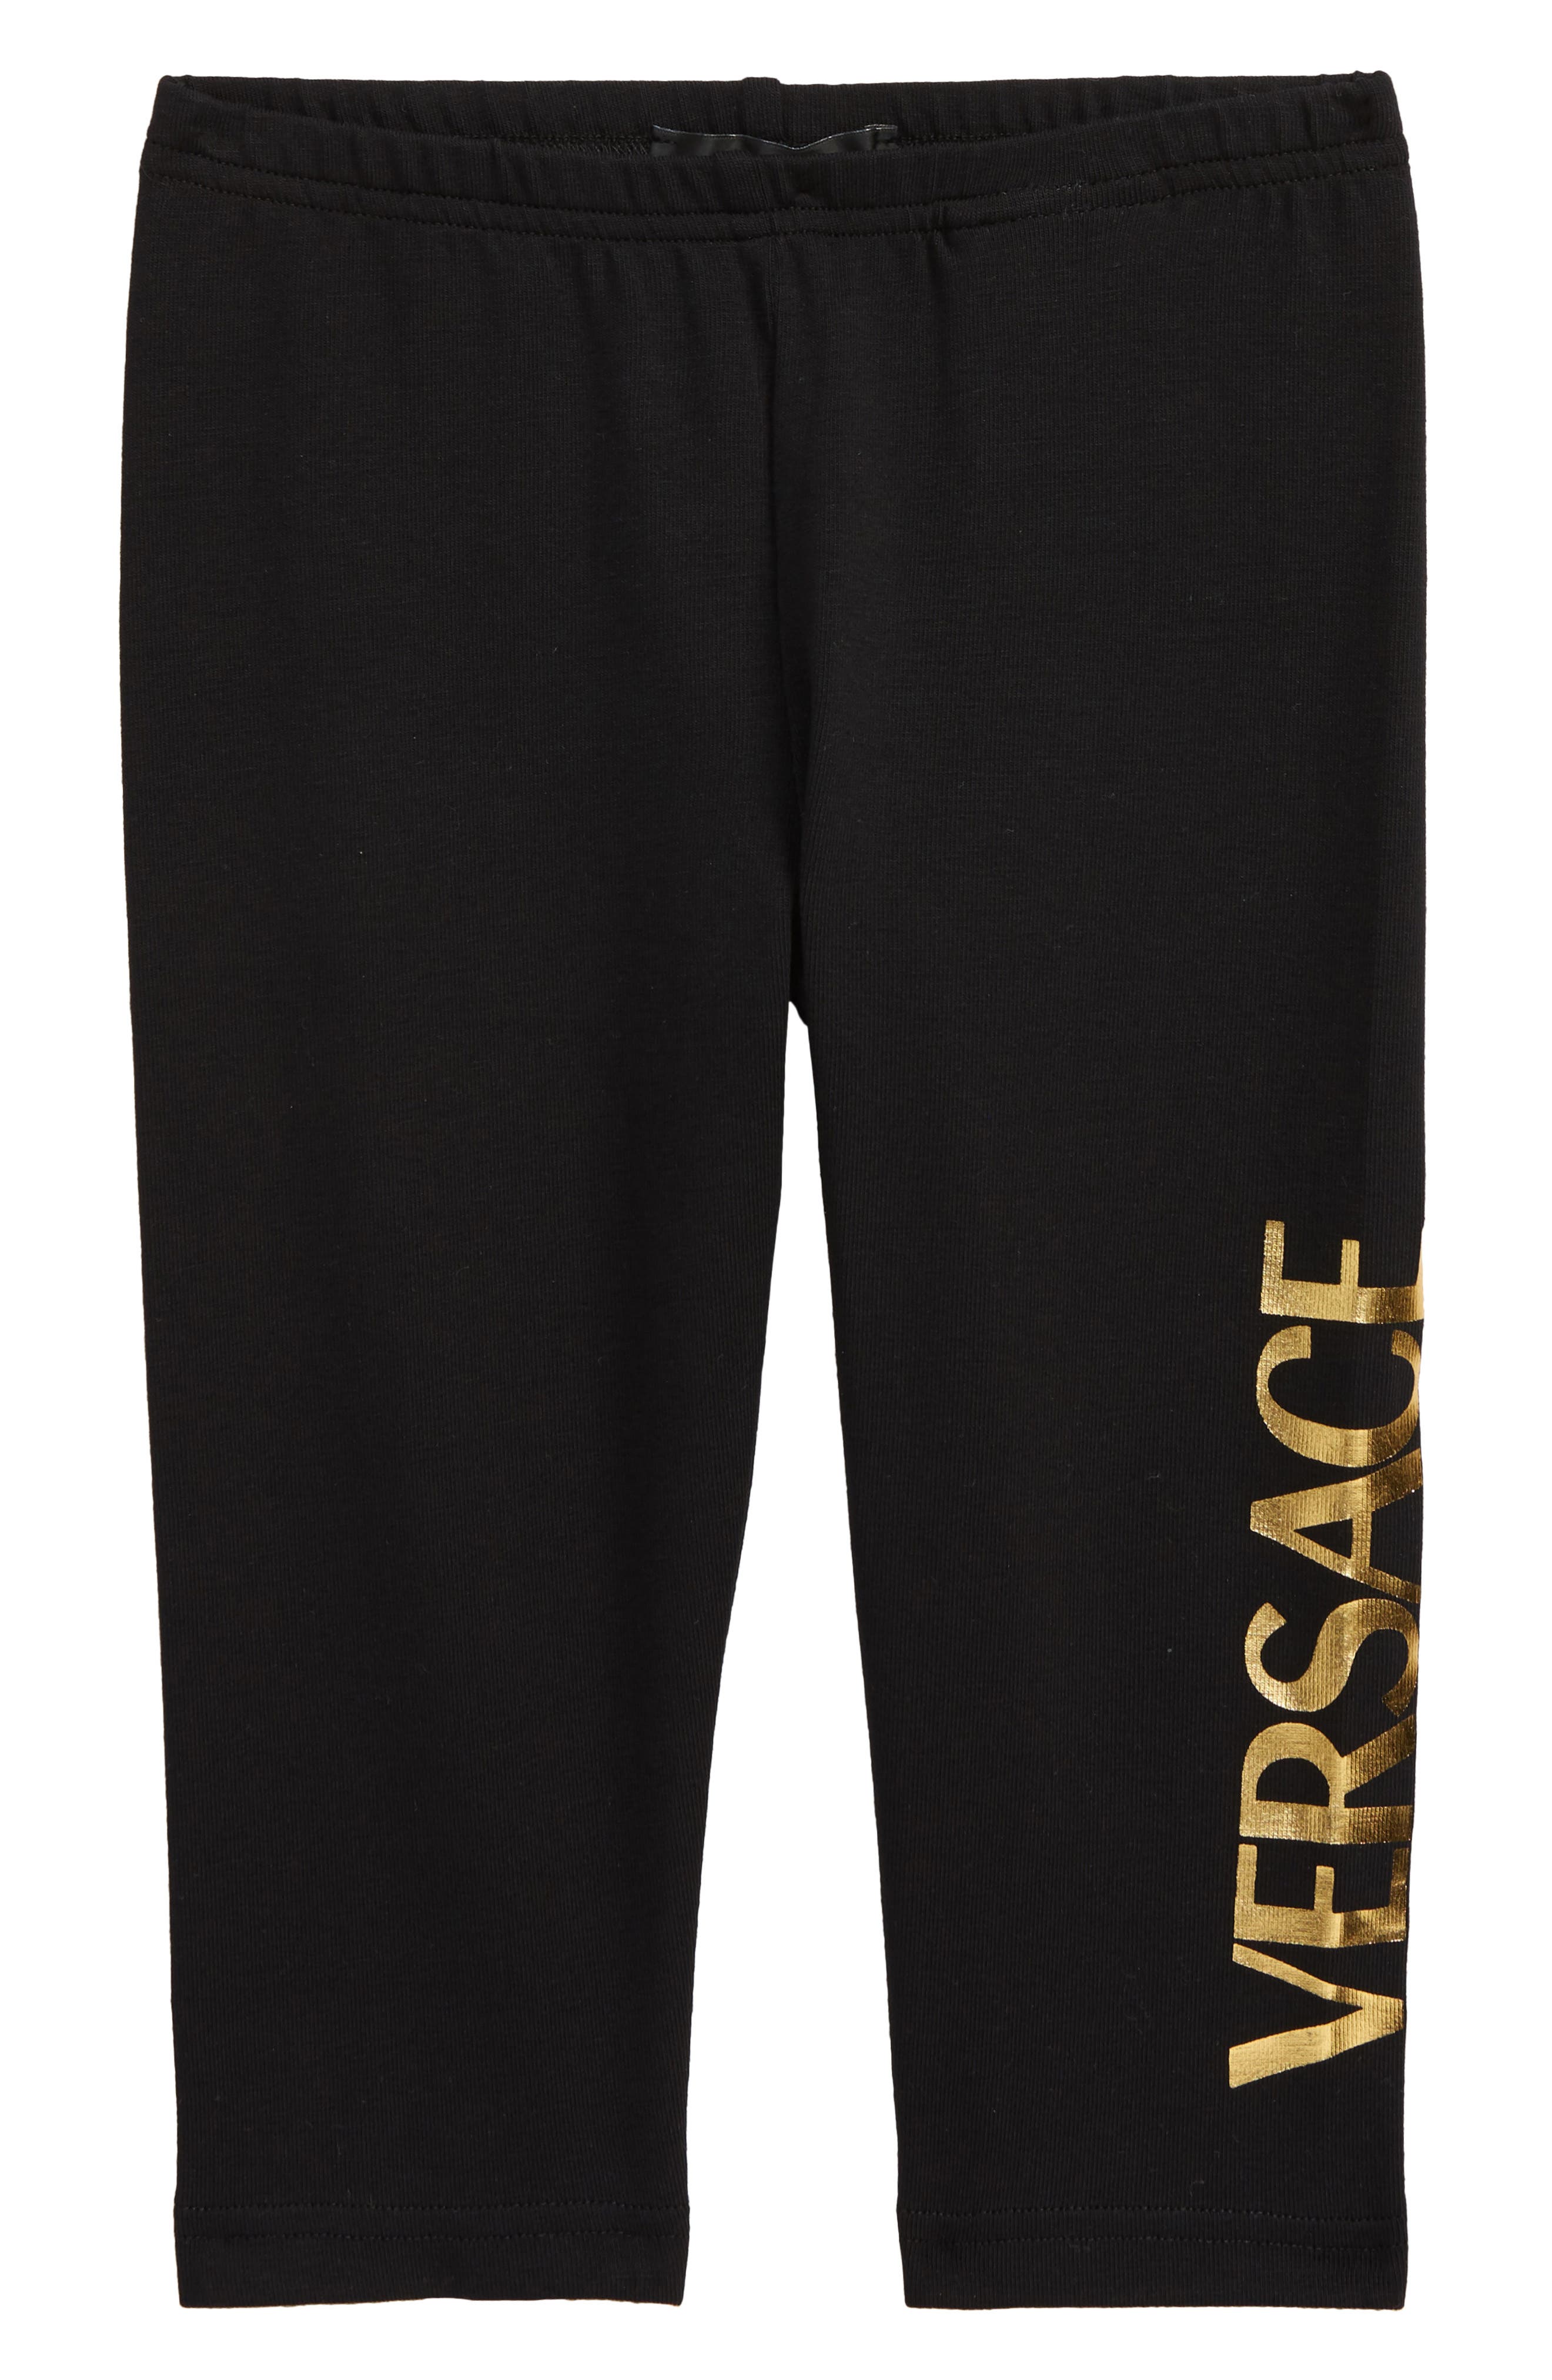 Versace Logo Leggings in Black Gold at Nordstrom, Size 12-18M Us